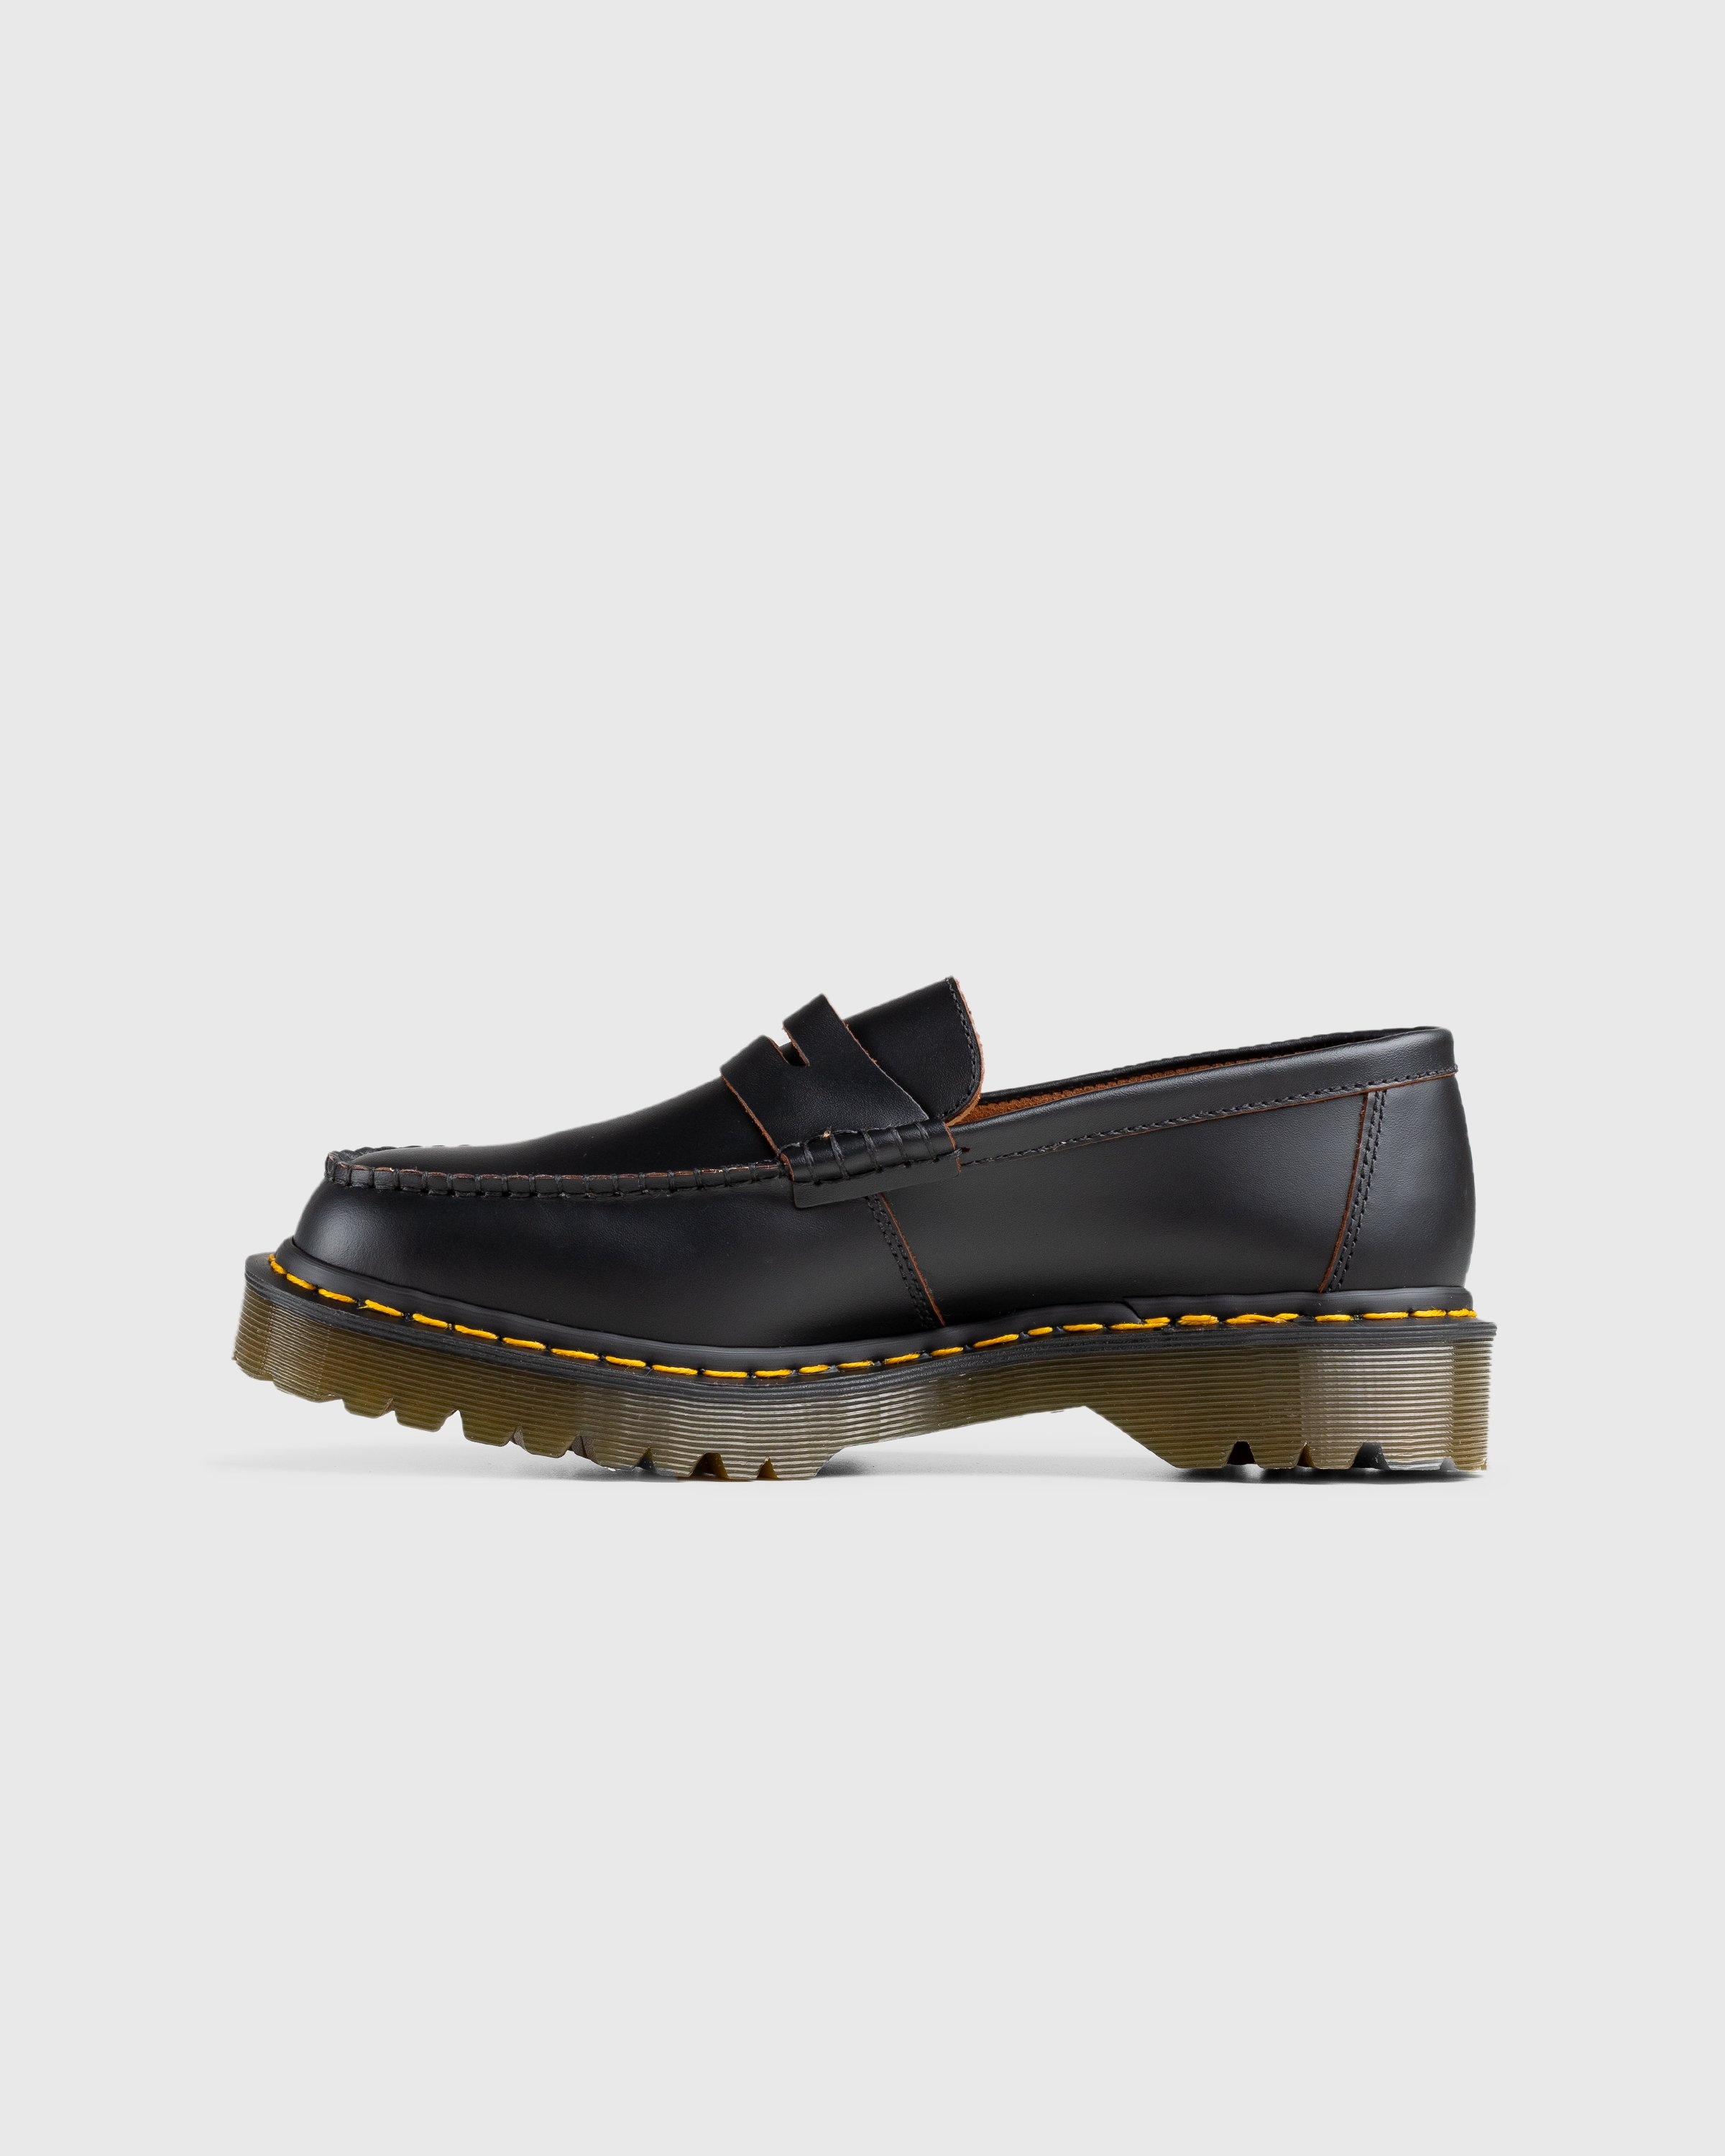 Dr. Martens – Penton Bex Quilon Leather Loafers Black - Loafers - Black - Image 2